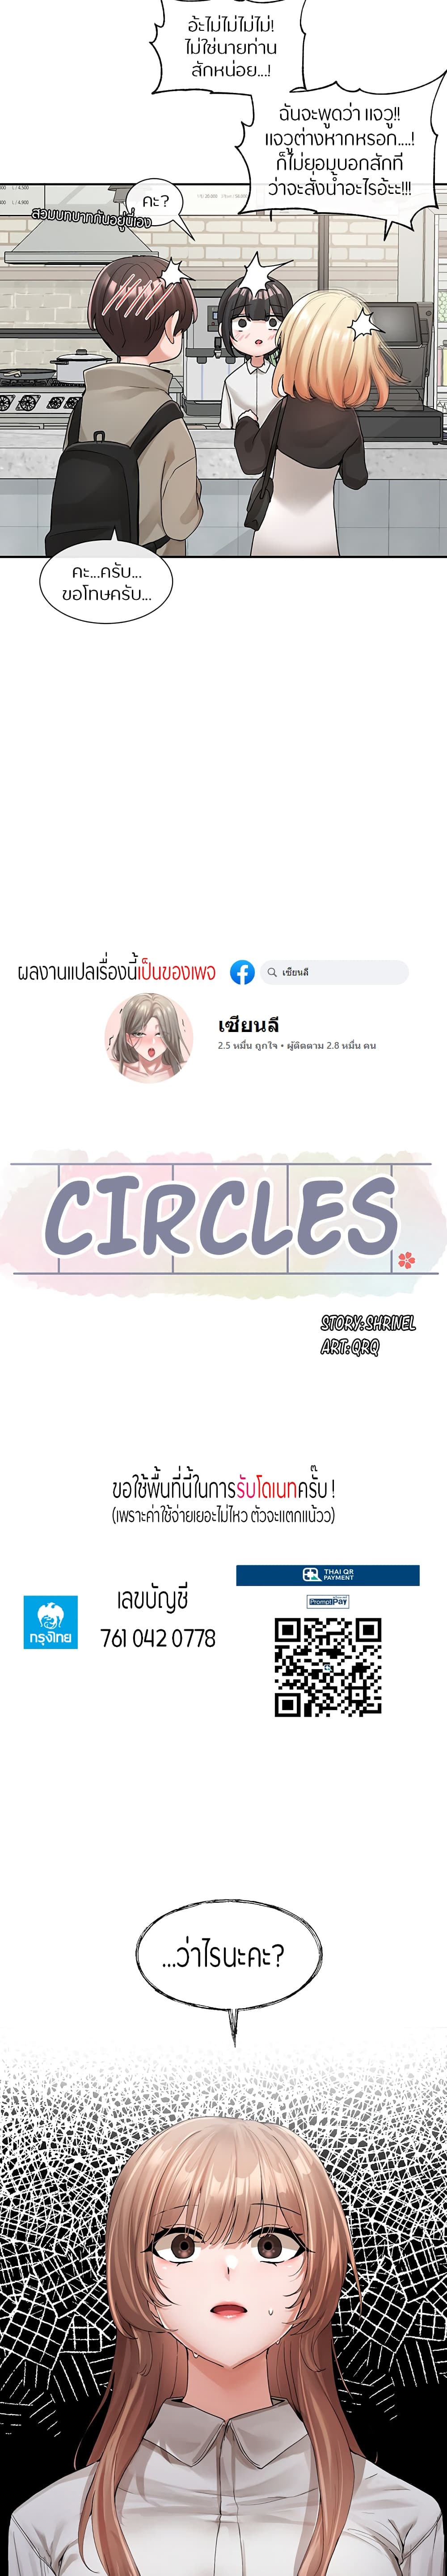 Theater Society (Circles) 119 (9)